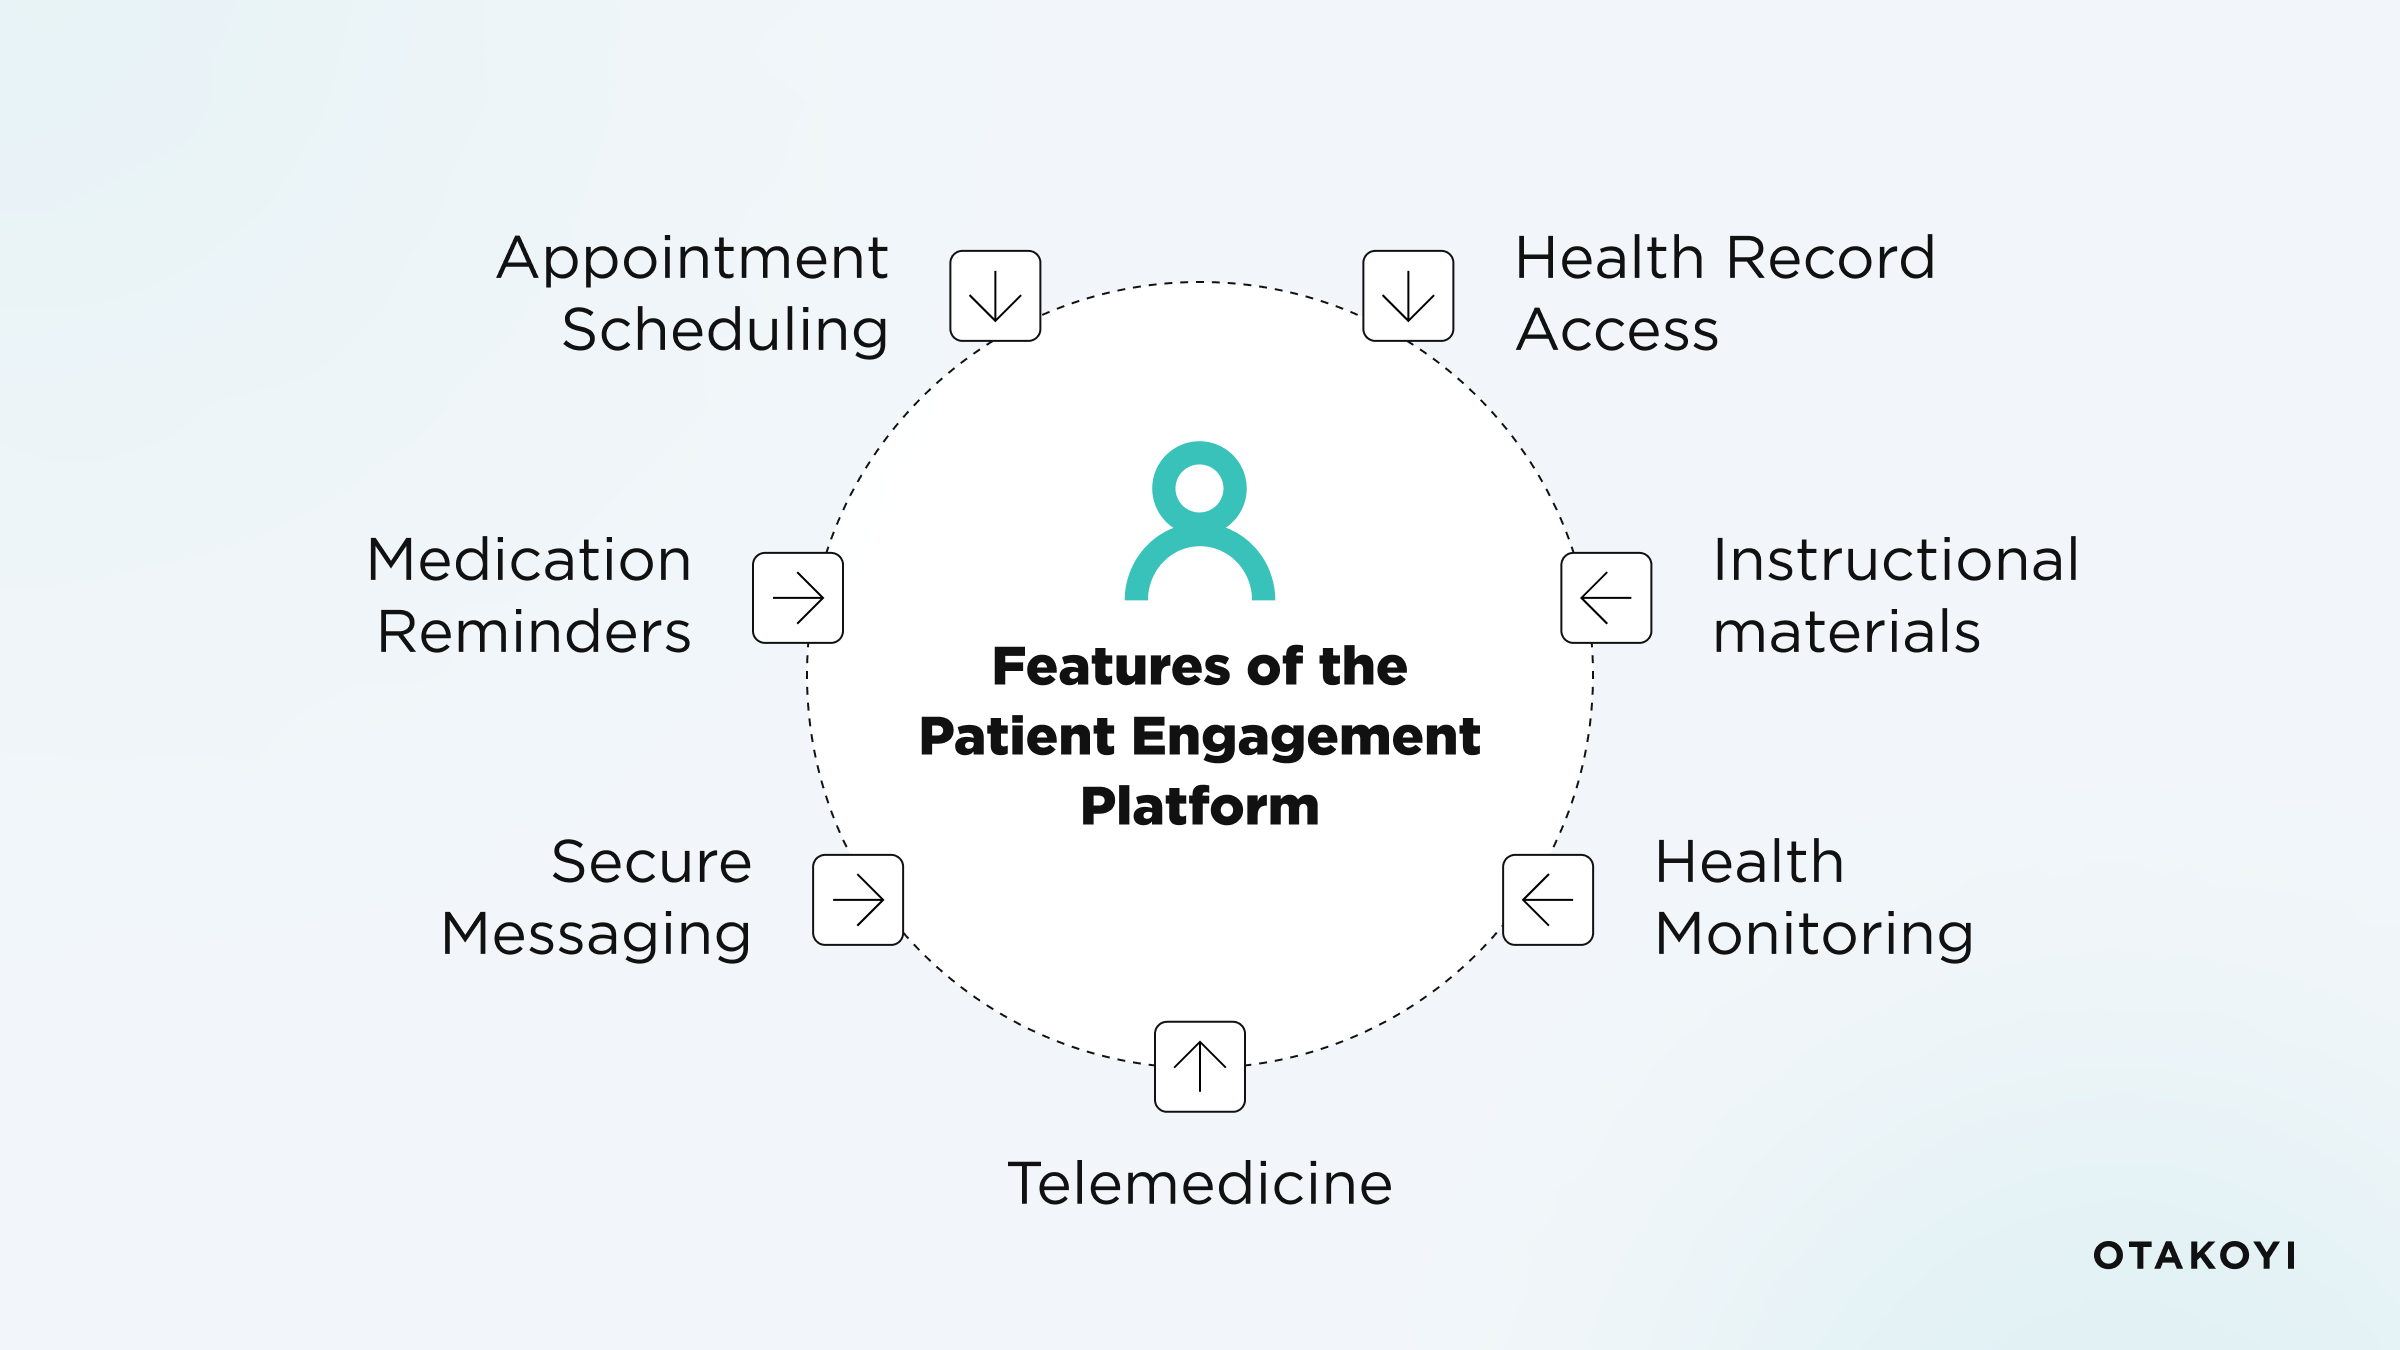 Features of the Patient Engagement Platform